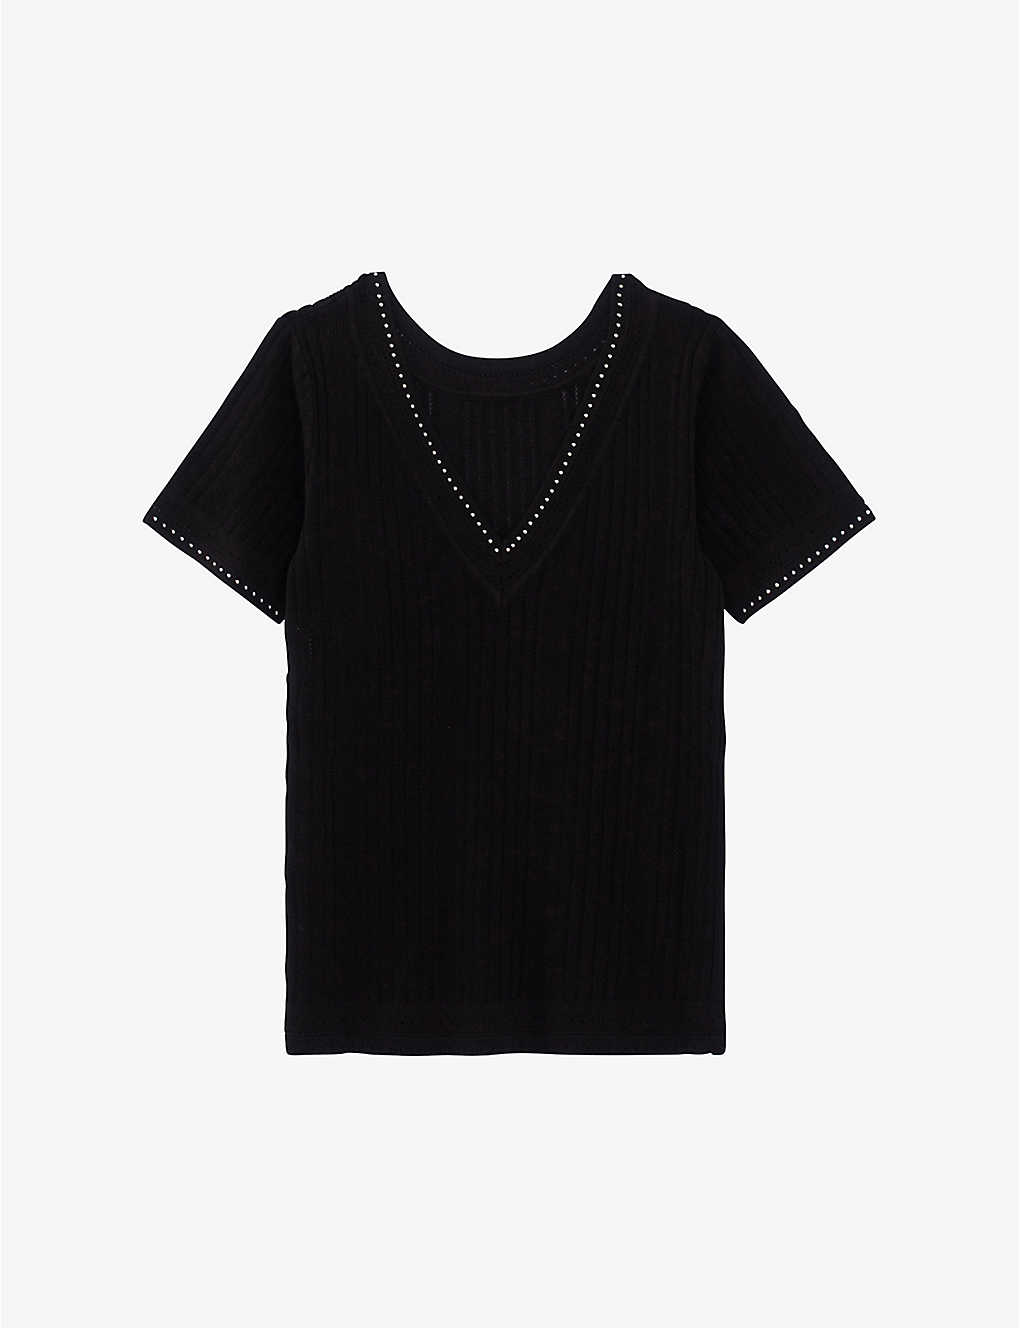 Ikks Womens Black Stud-embellished Short-sleeved Knitted Top